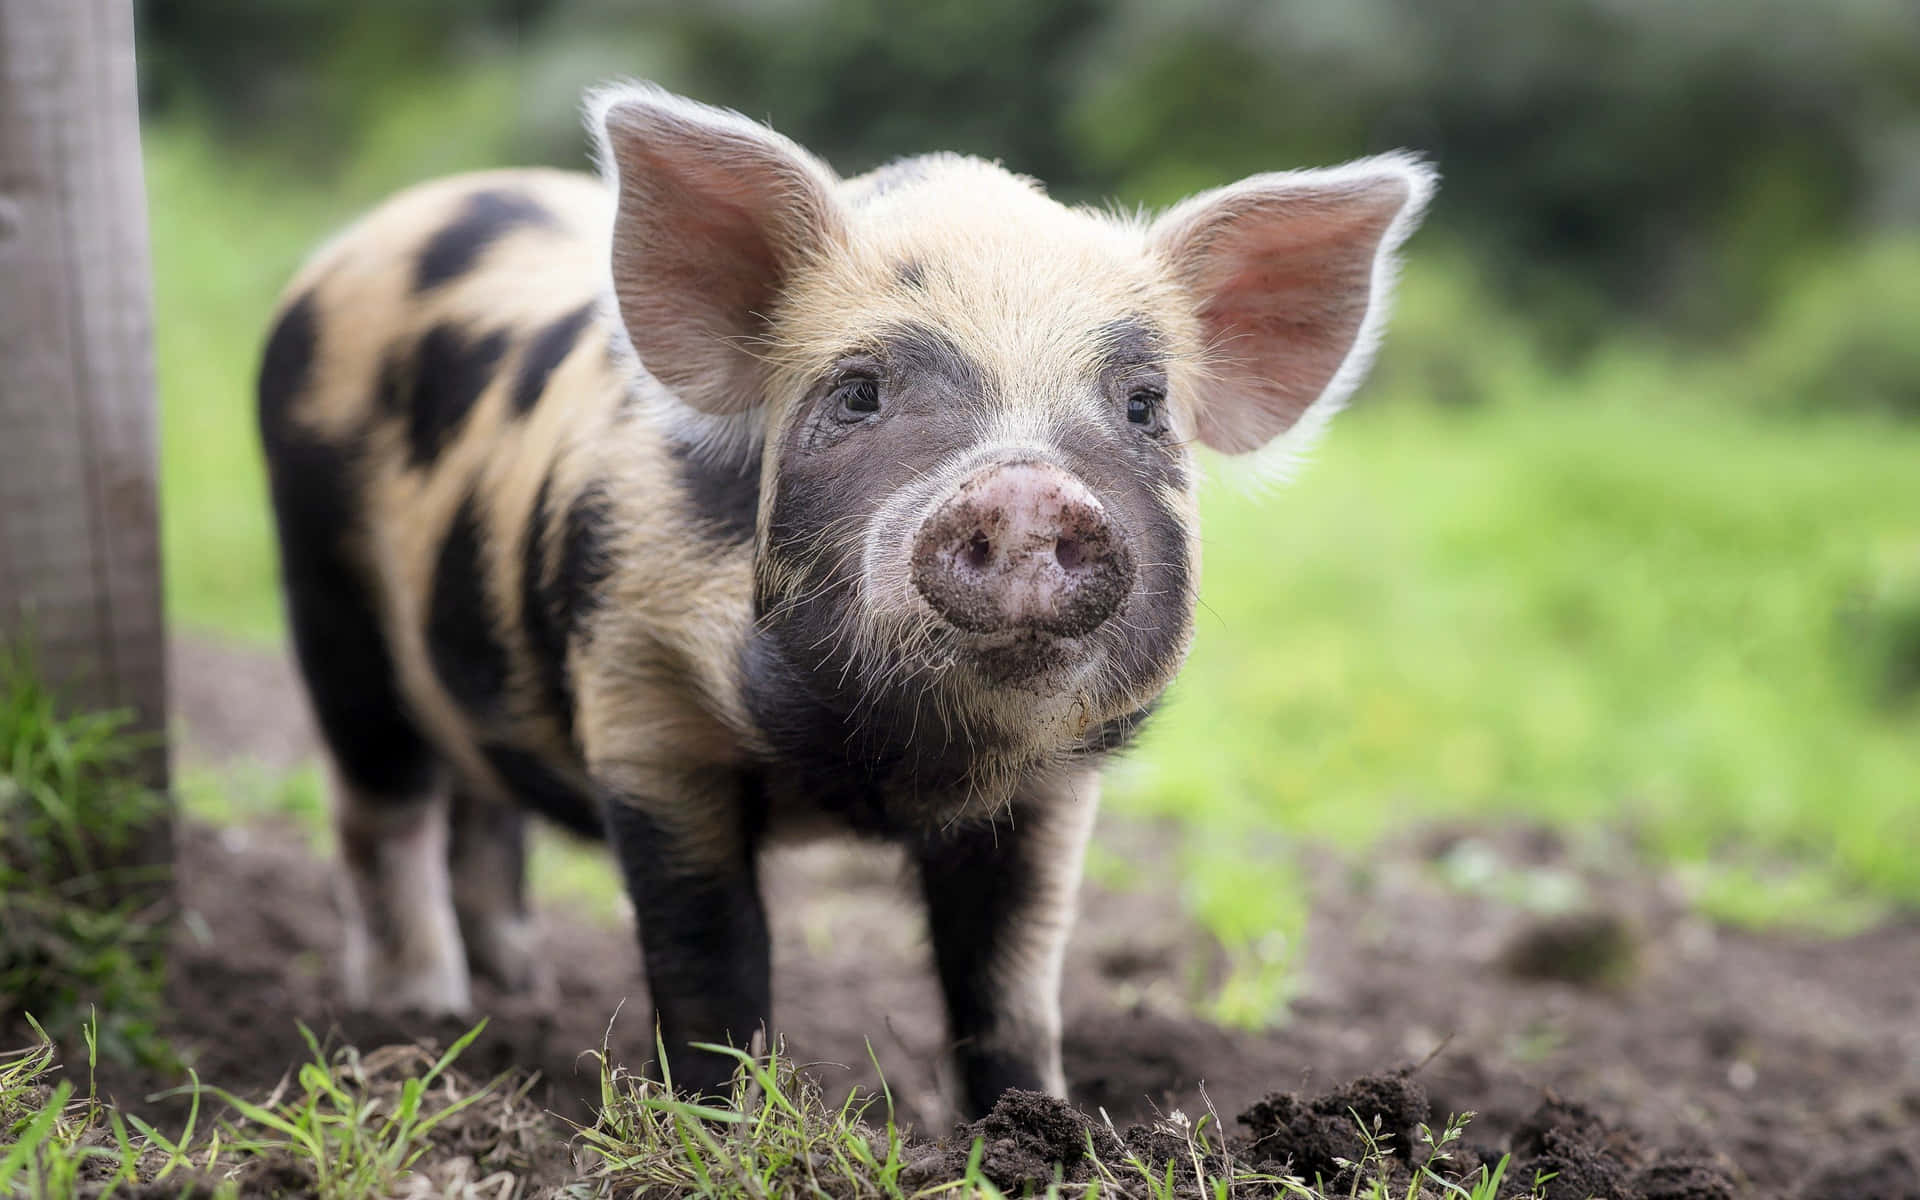 Adorable Piglet Enjoying The Countryside